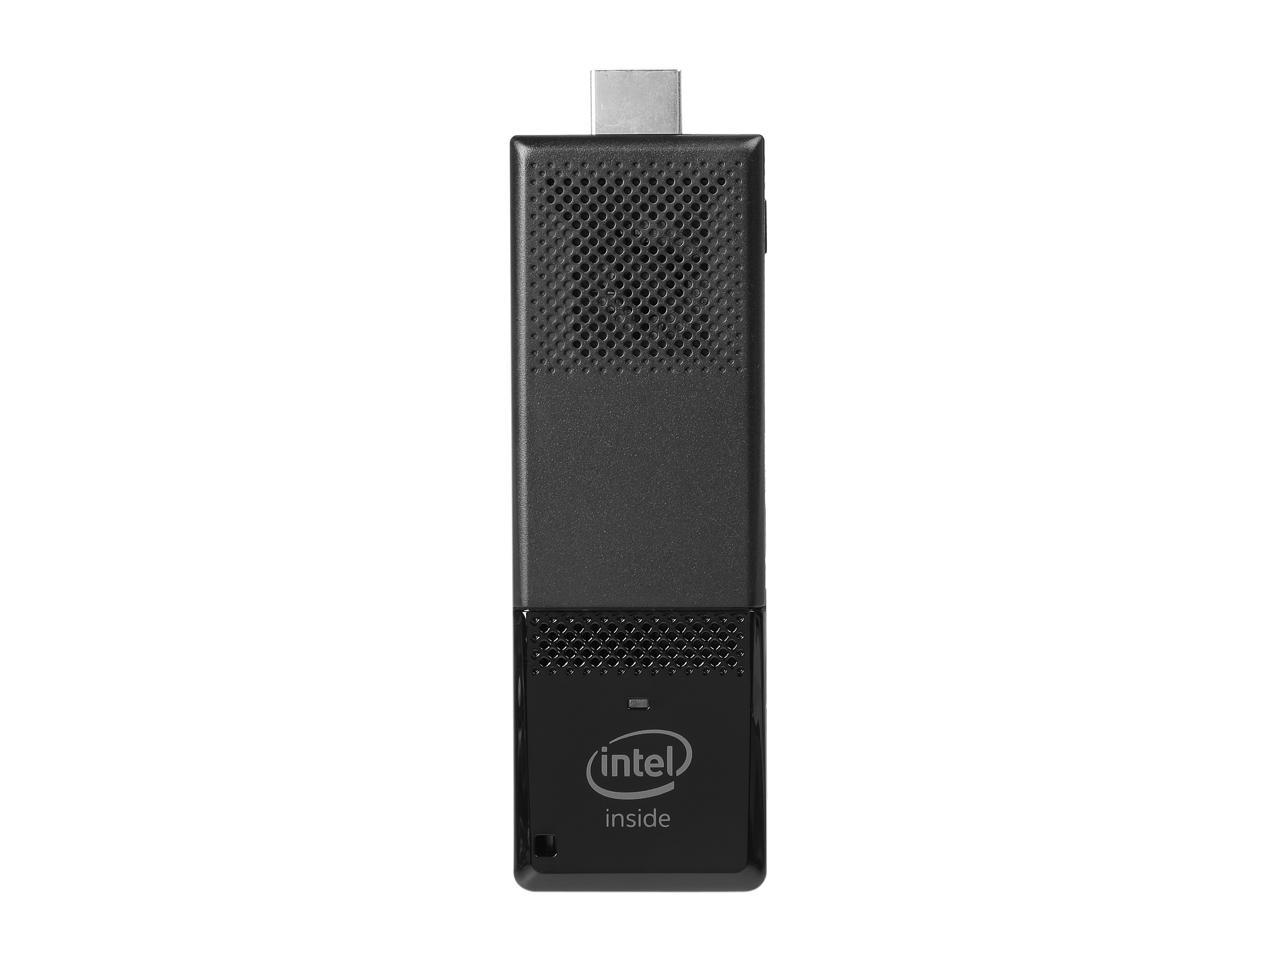 Intel BLKSTK1A32SC Black Compute Stick, Without OS